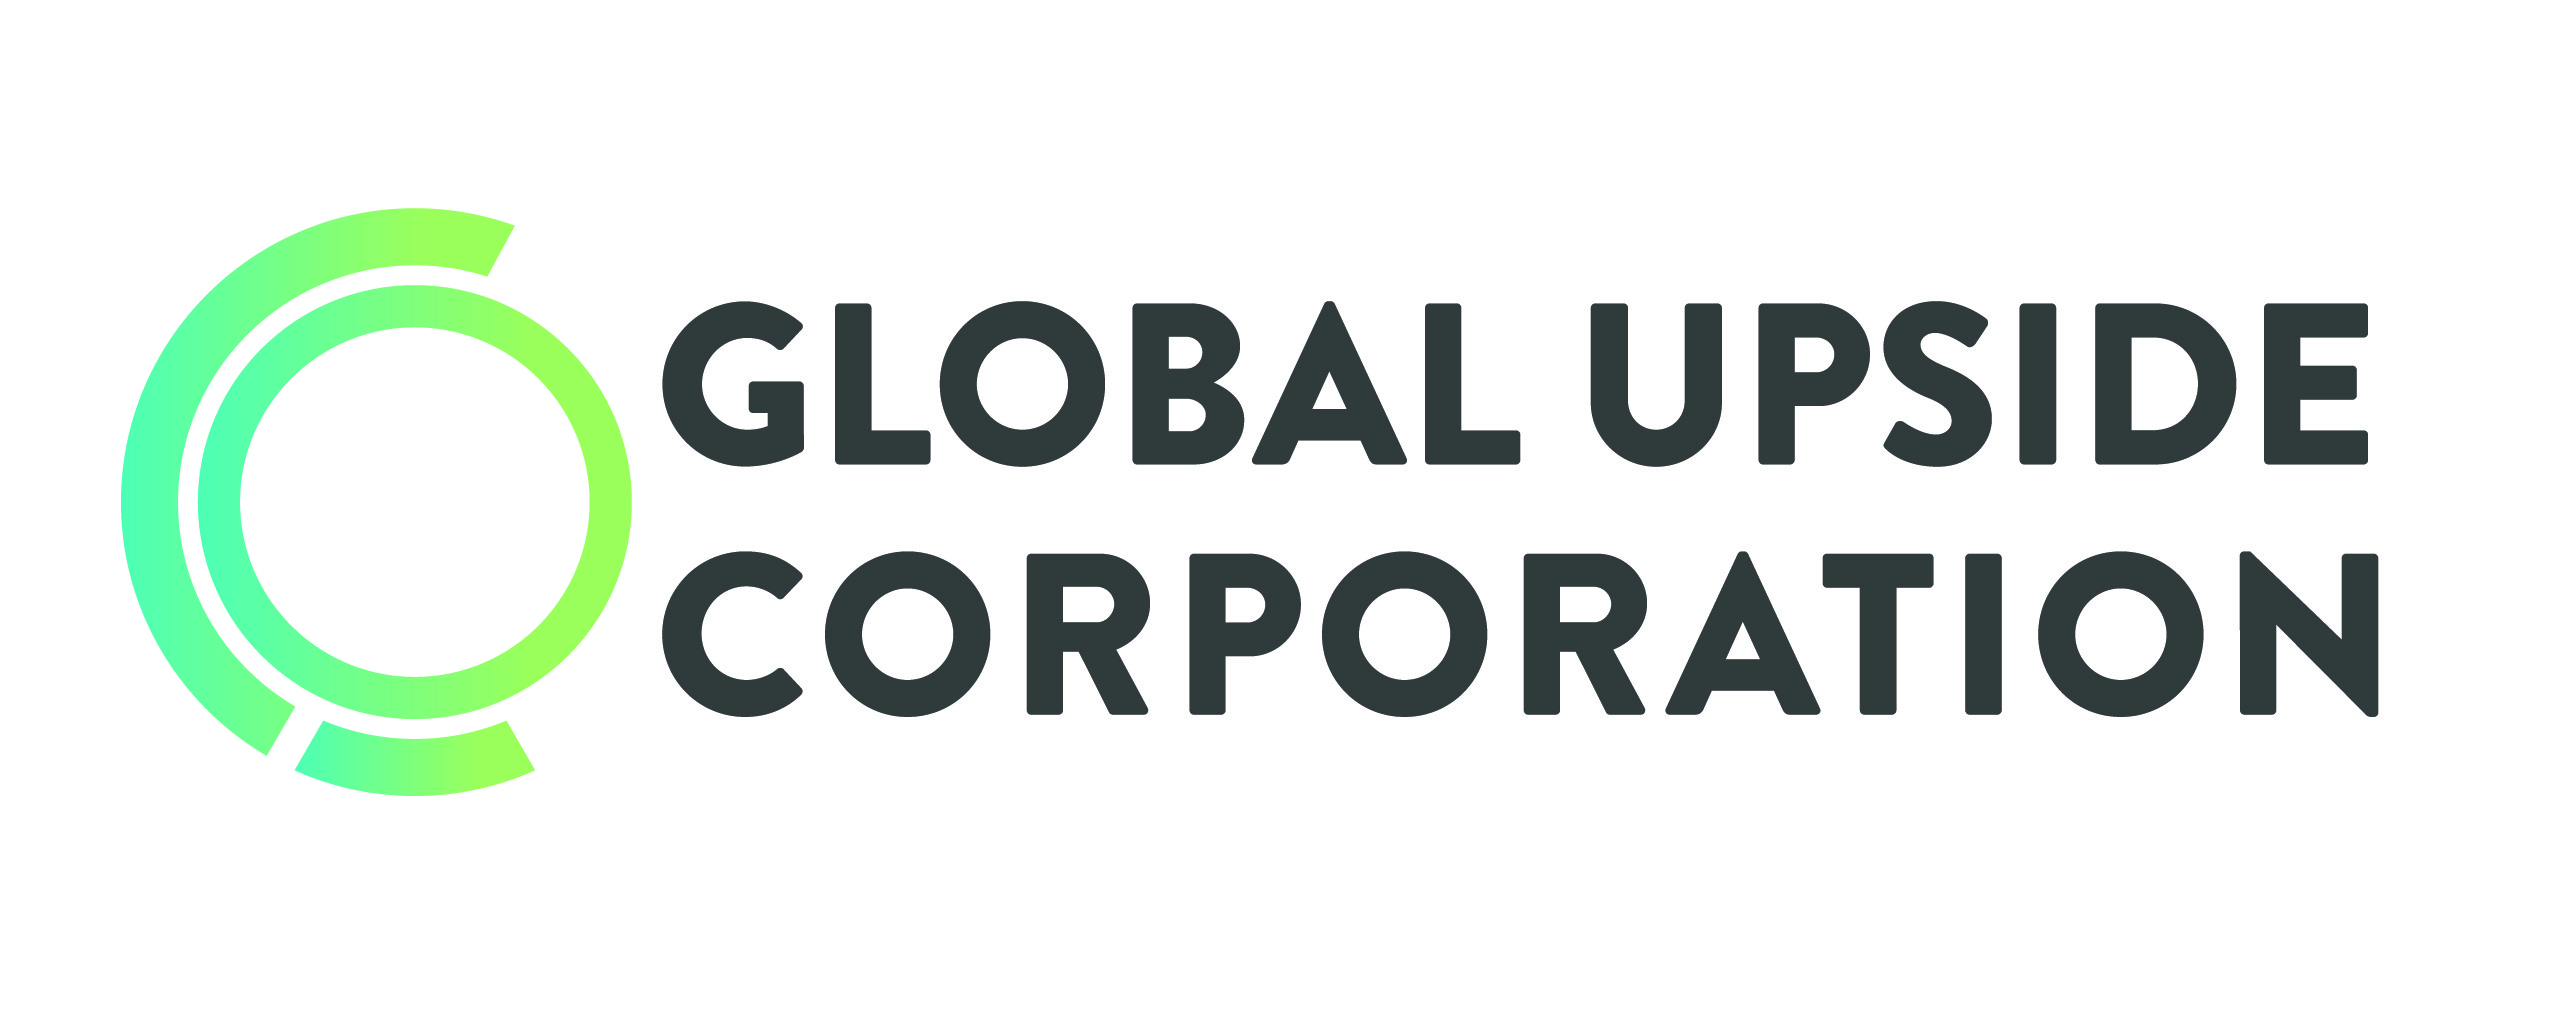 Global Upside Corporation